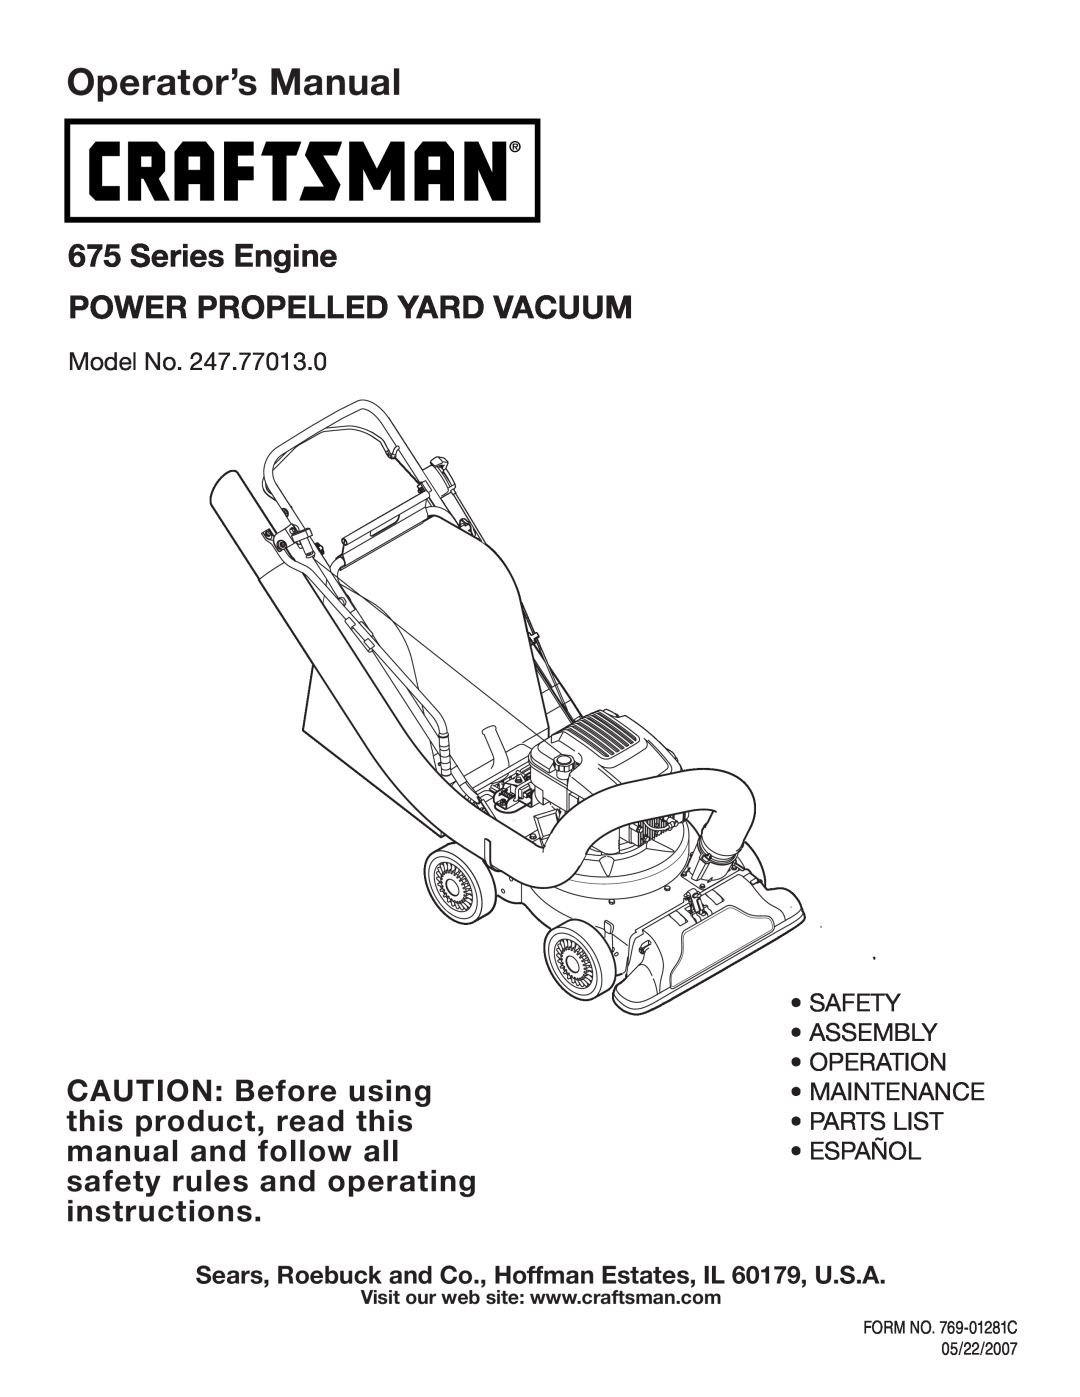 Craftsman 247.77013.0 manual Sears, Roebuck and Co., Hoffman Estates, IL 60179, U.S.A, Operator’s Manual 